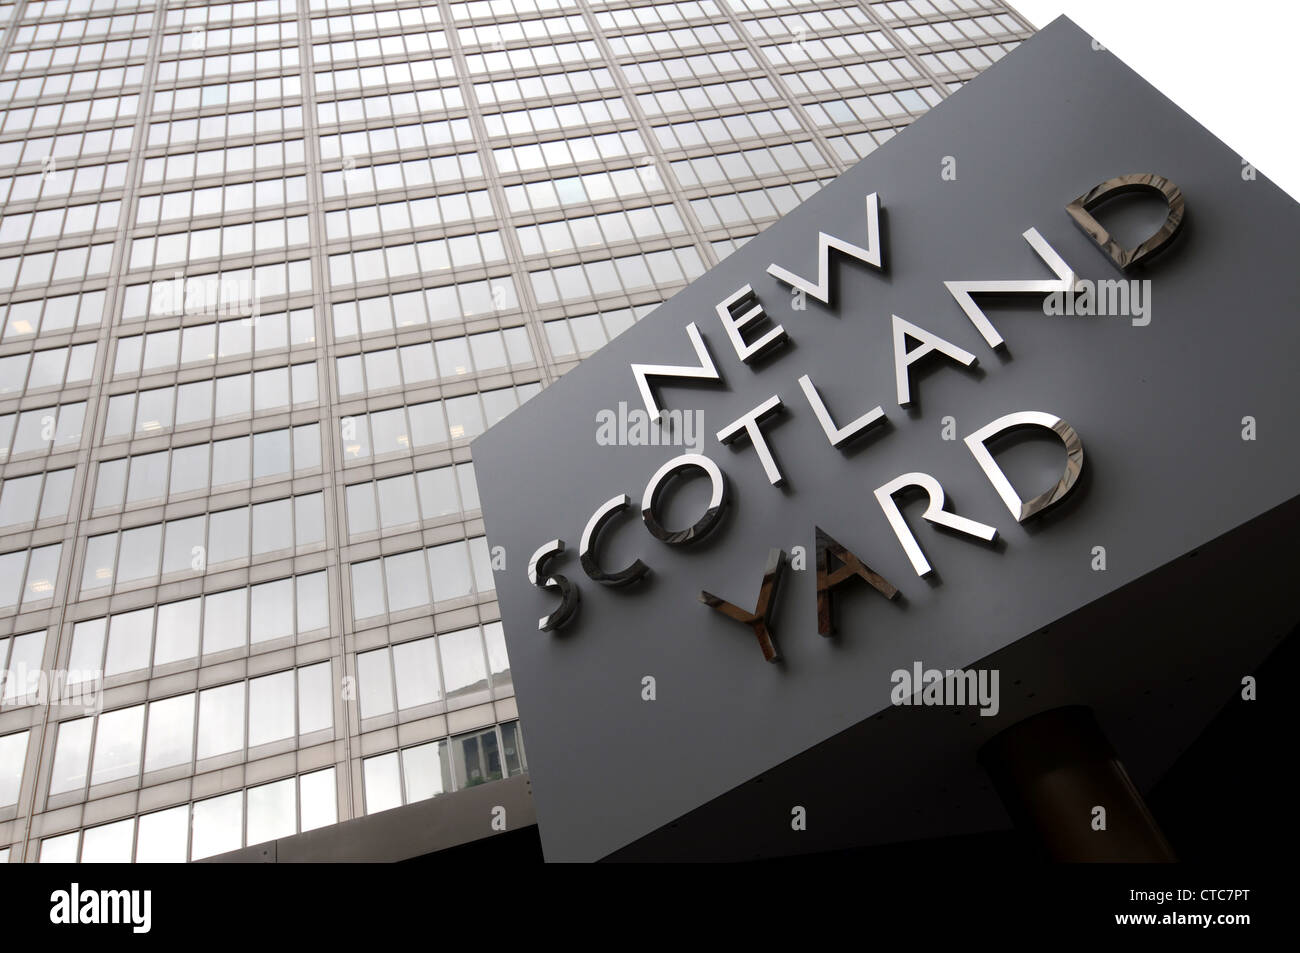 New Scotland Yard, London, England, UK Stockfoto